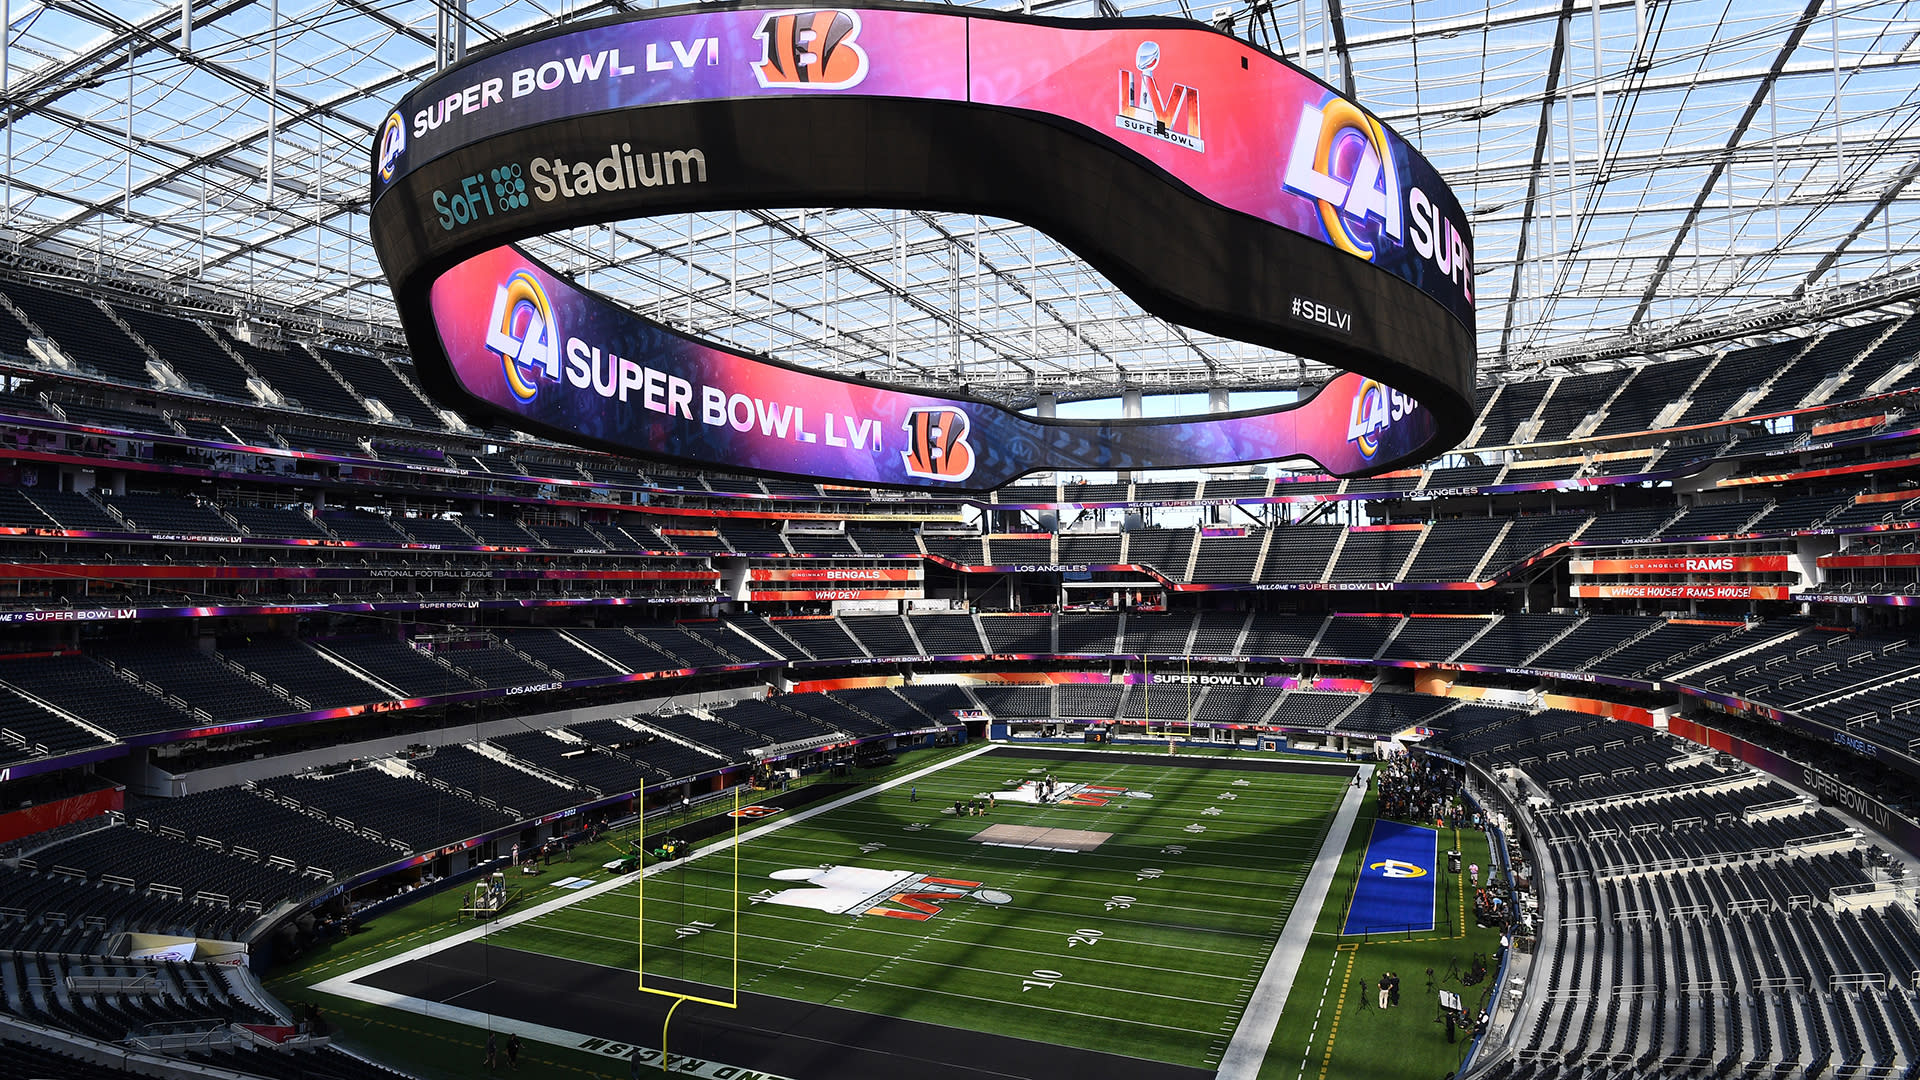 Super Bowl LVI; Los Angeles Rams @ Cincinnati Bengals; #RamsHouse  #RuleItAll #SuperBowl – TouchdownTips